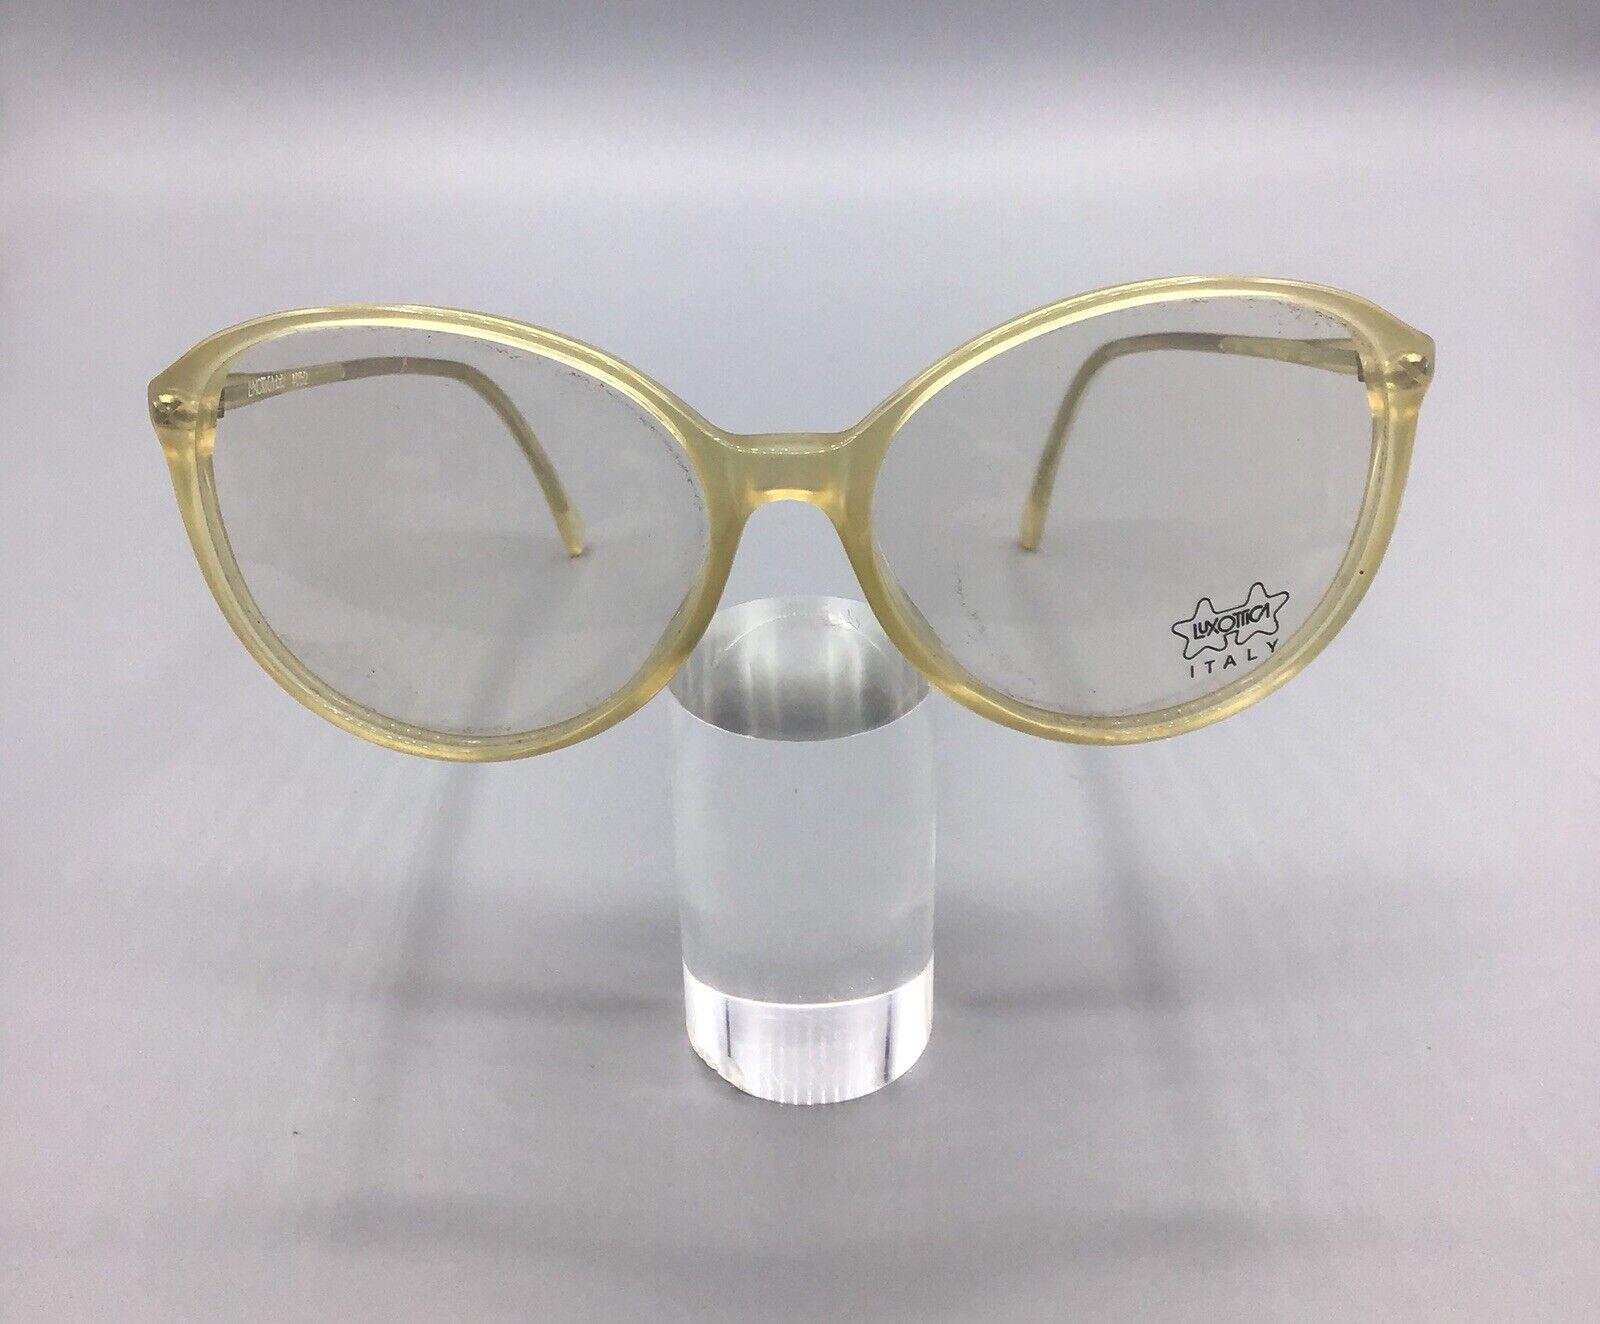 Luxottica occhiale vintage frame Italy d57 4052 brillen eyewear lunettes